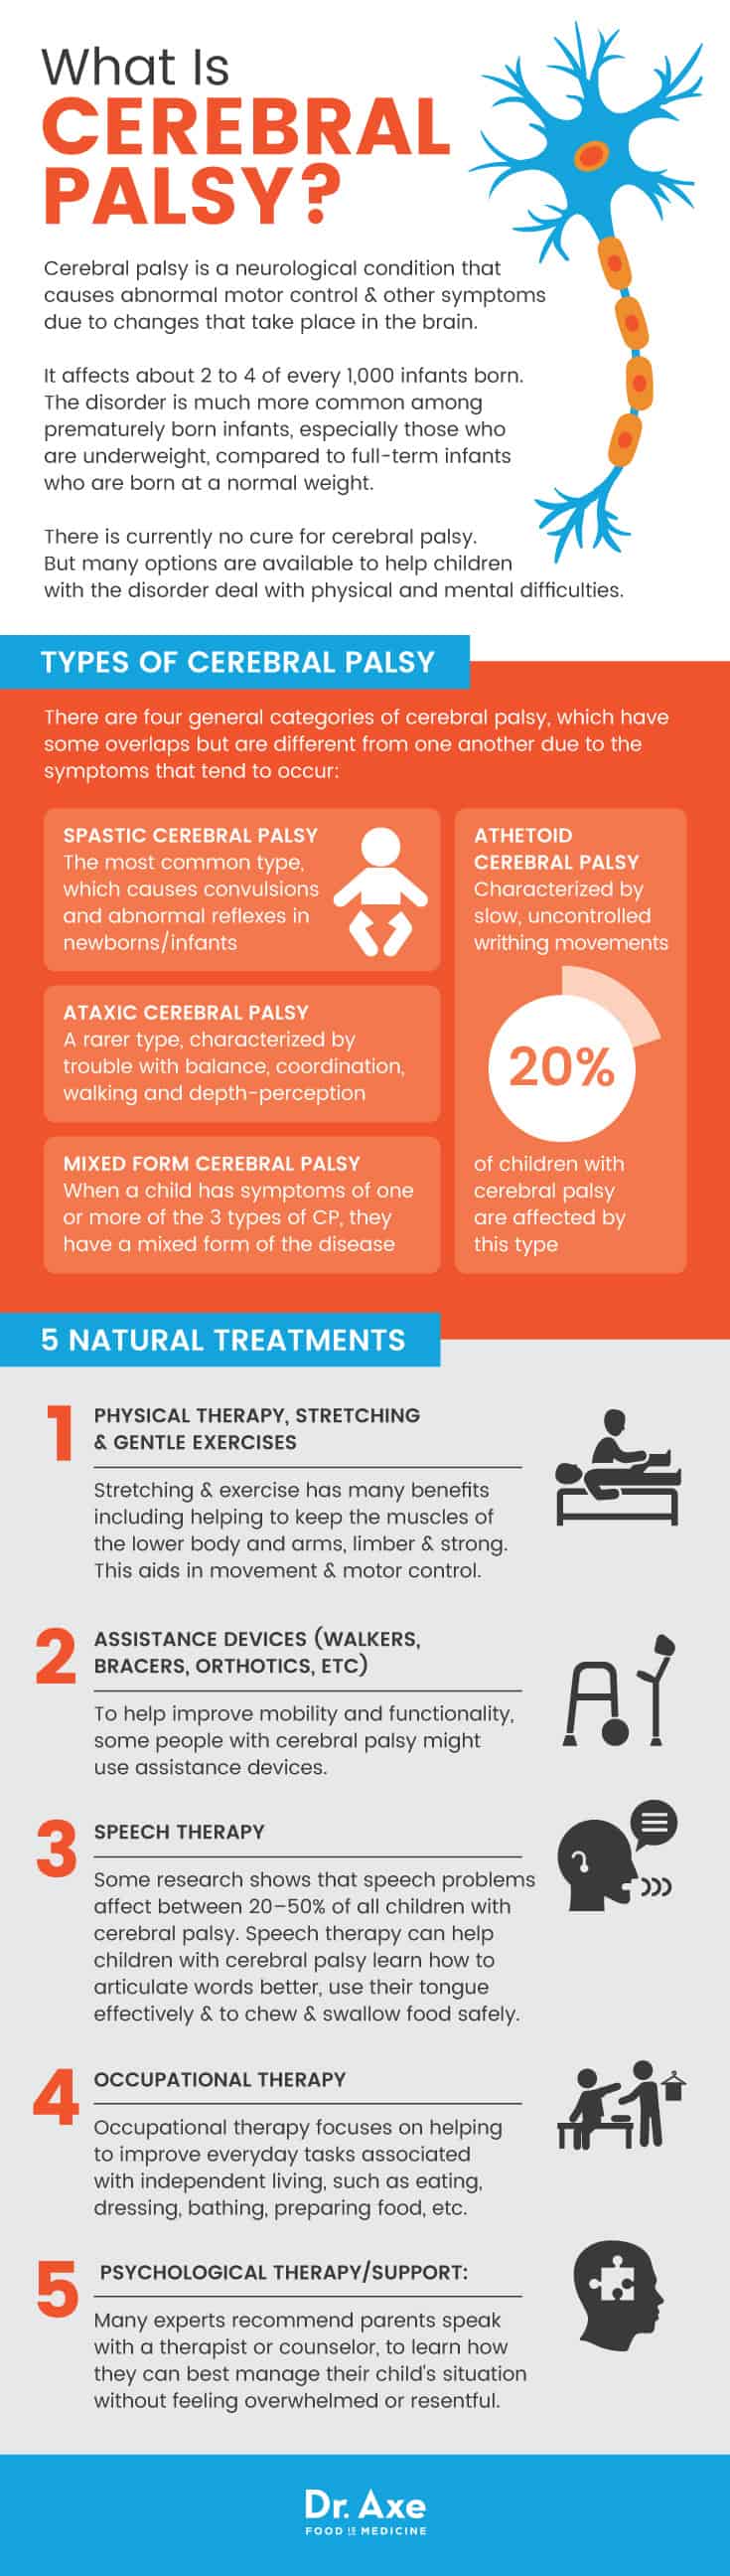 Cerebral palsy types & treatment - Dr. Axe